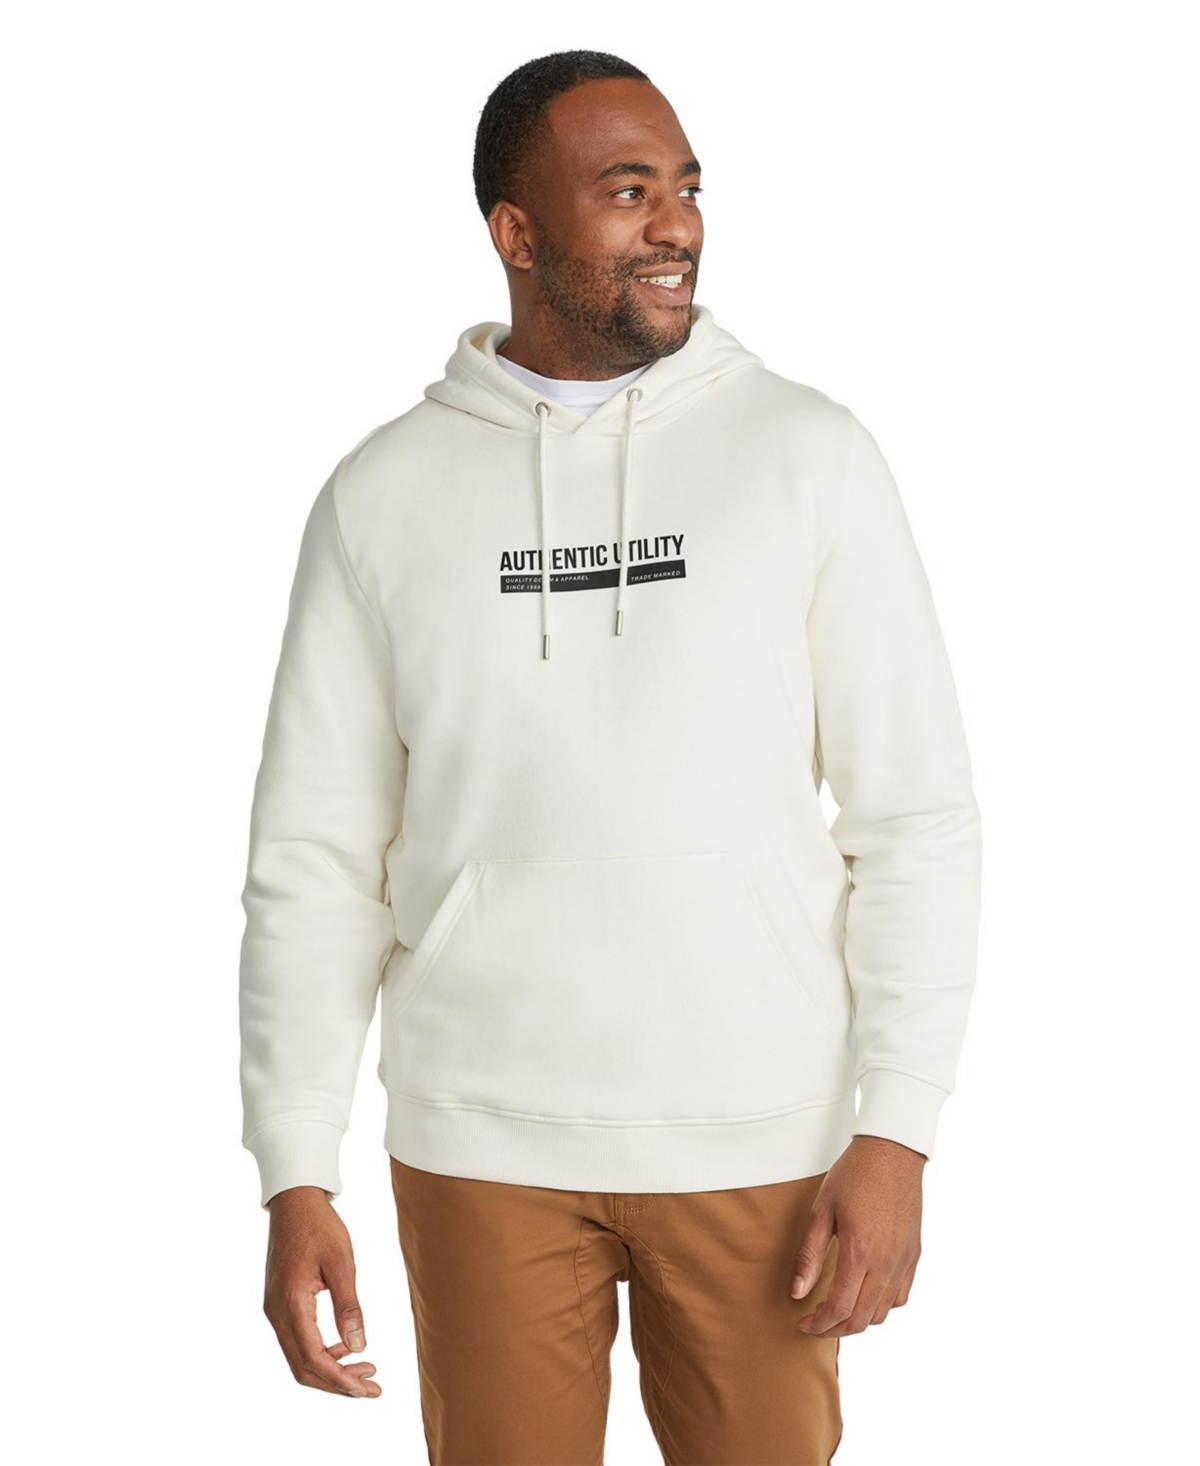 Mens Authentic Utility Hoodie Sweatshirt Big & Tall - Ivory